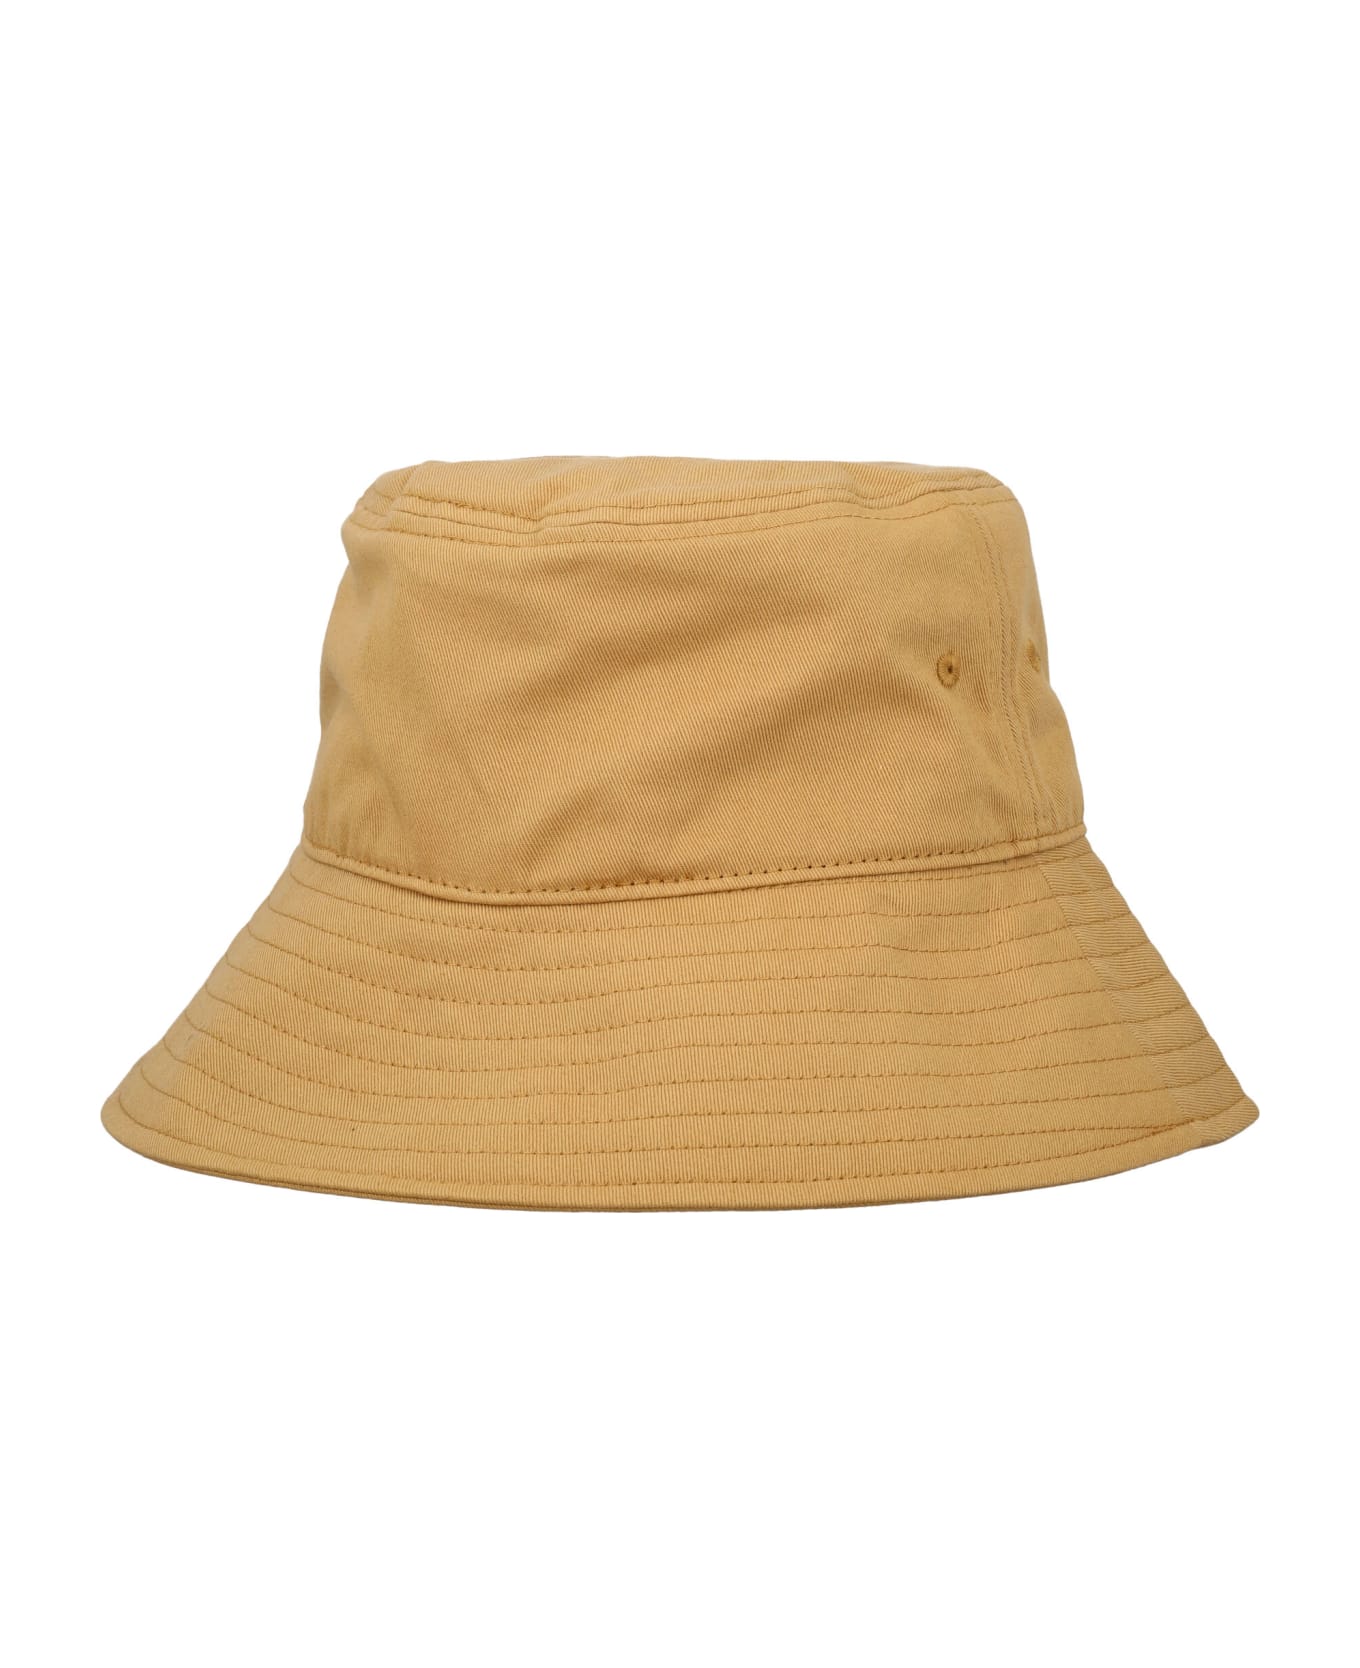 Carhartt Ashley Bucket Hat - BOURBON 帽子